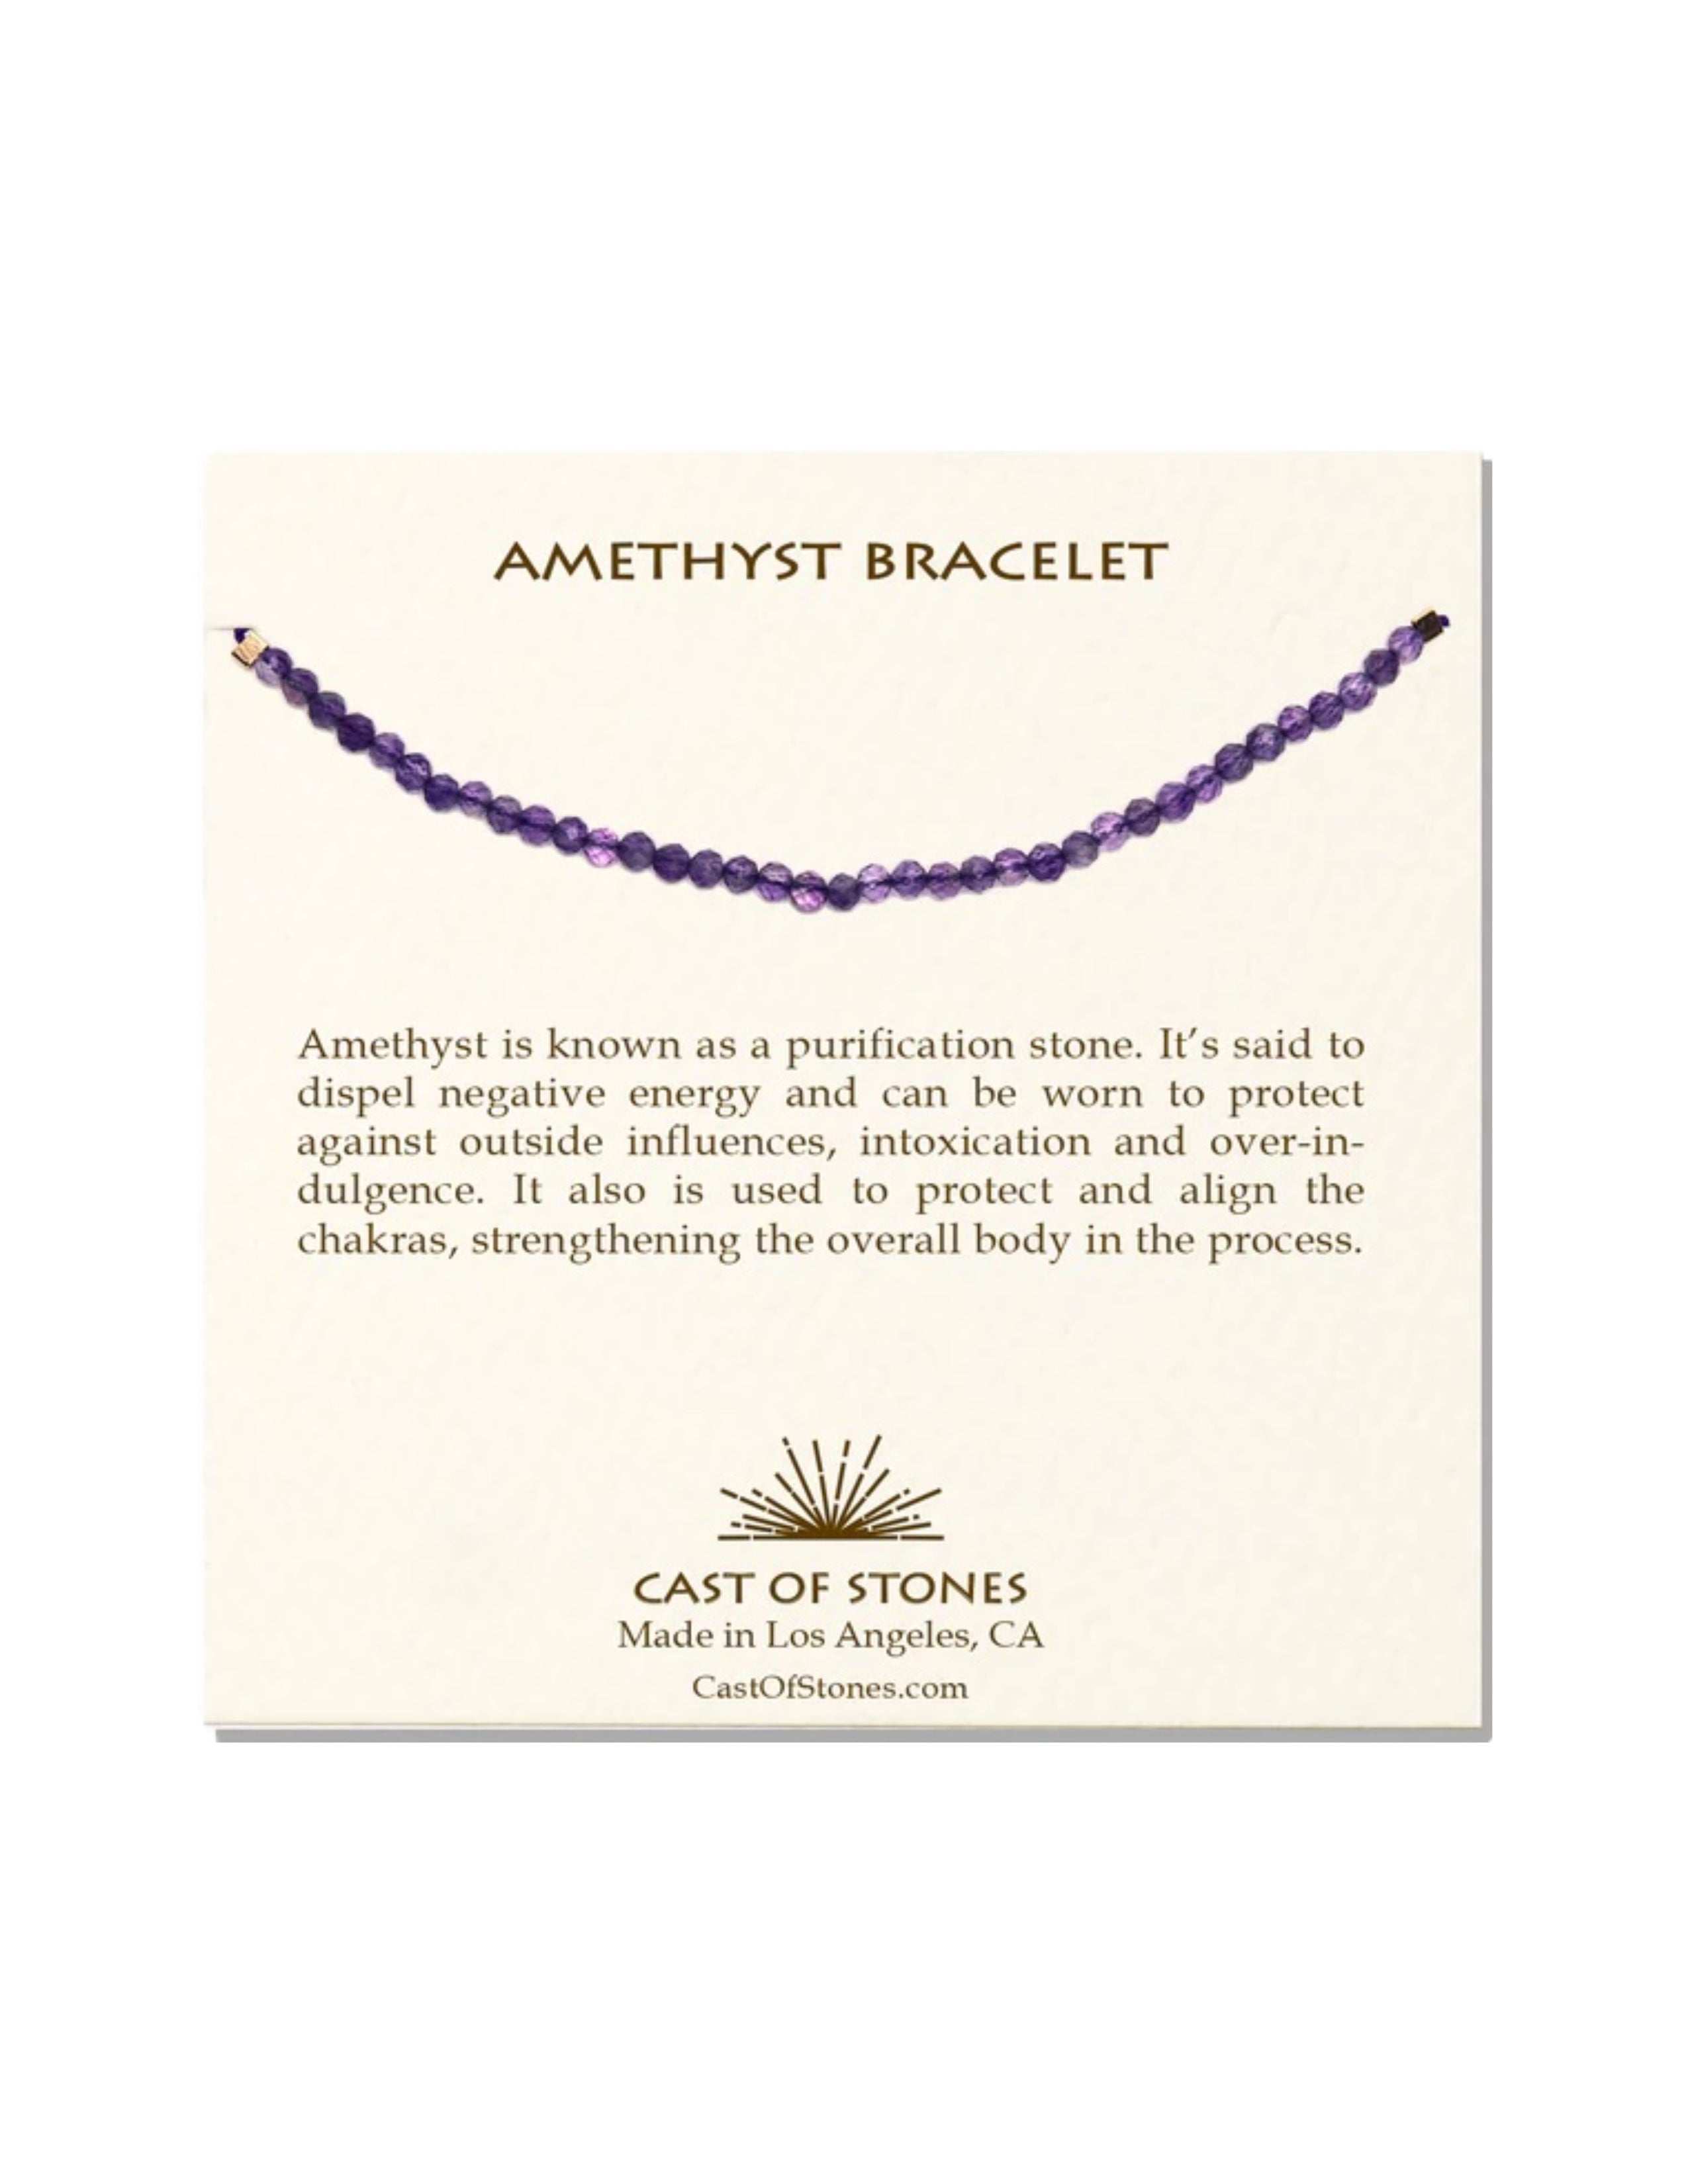 Amethyst Bracelet